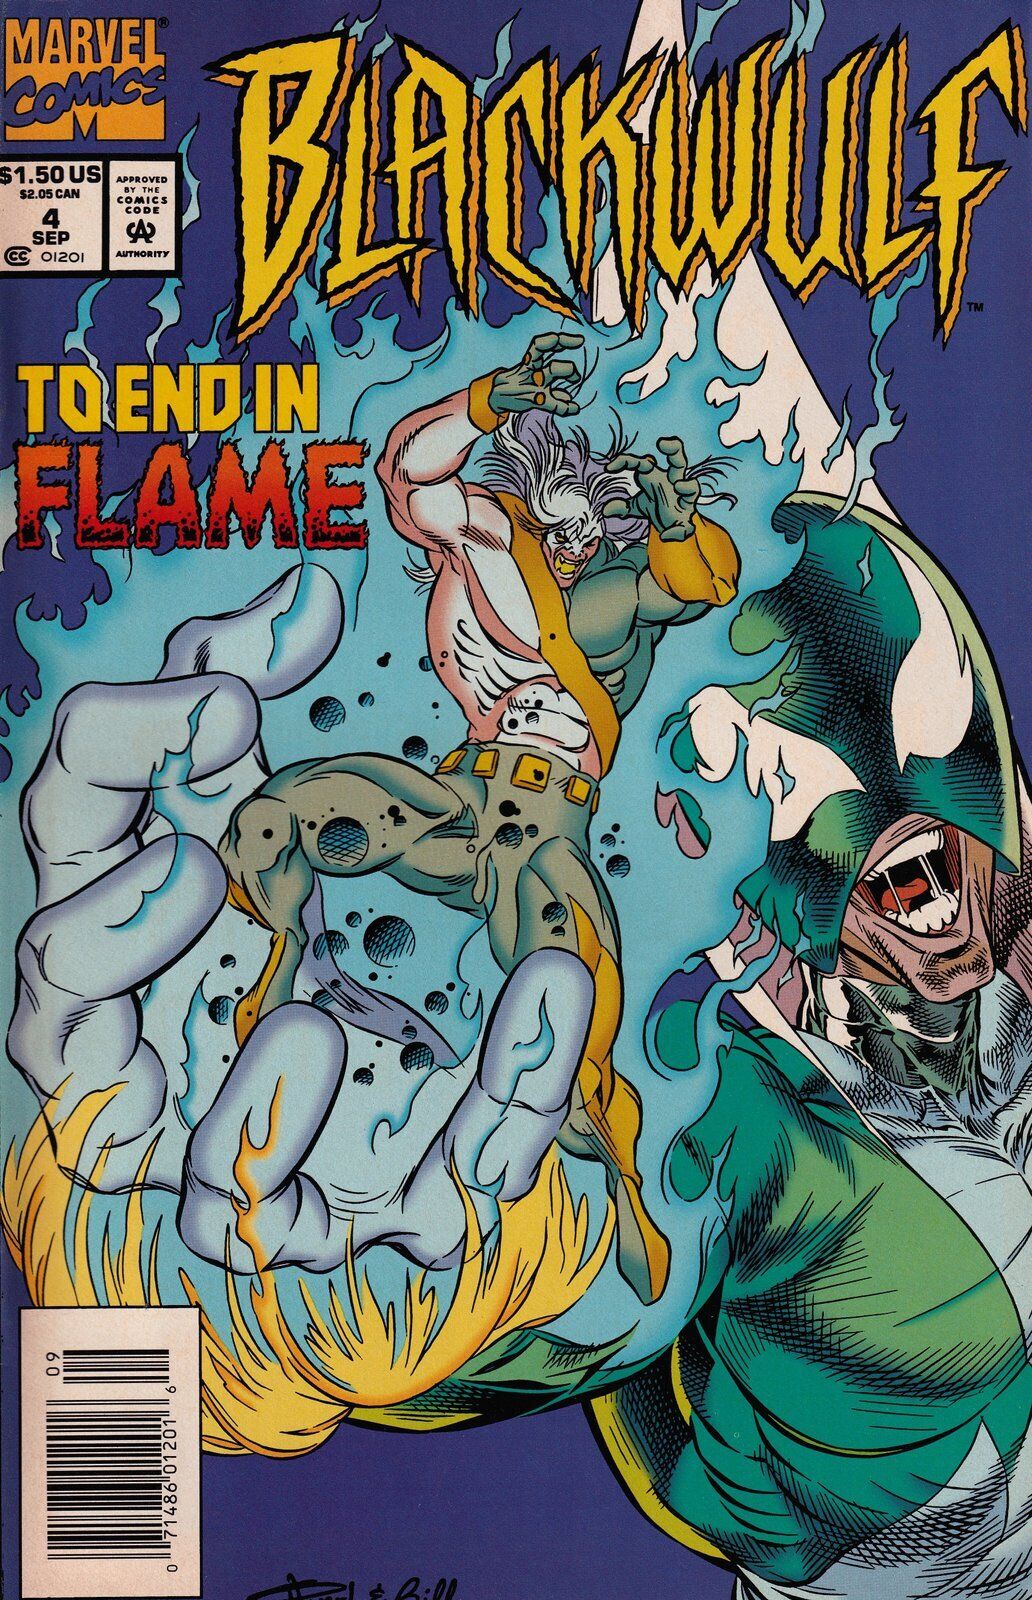 Blackwulf #4 Newsstand Cover (1994-1995) Marvel Comics